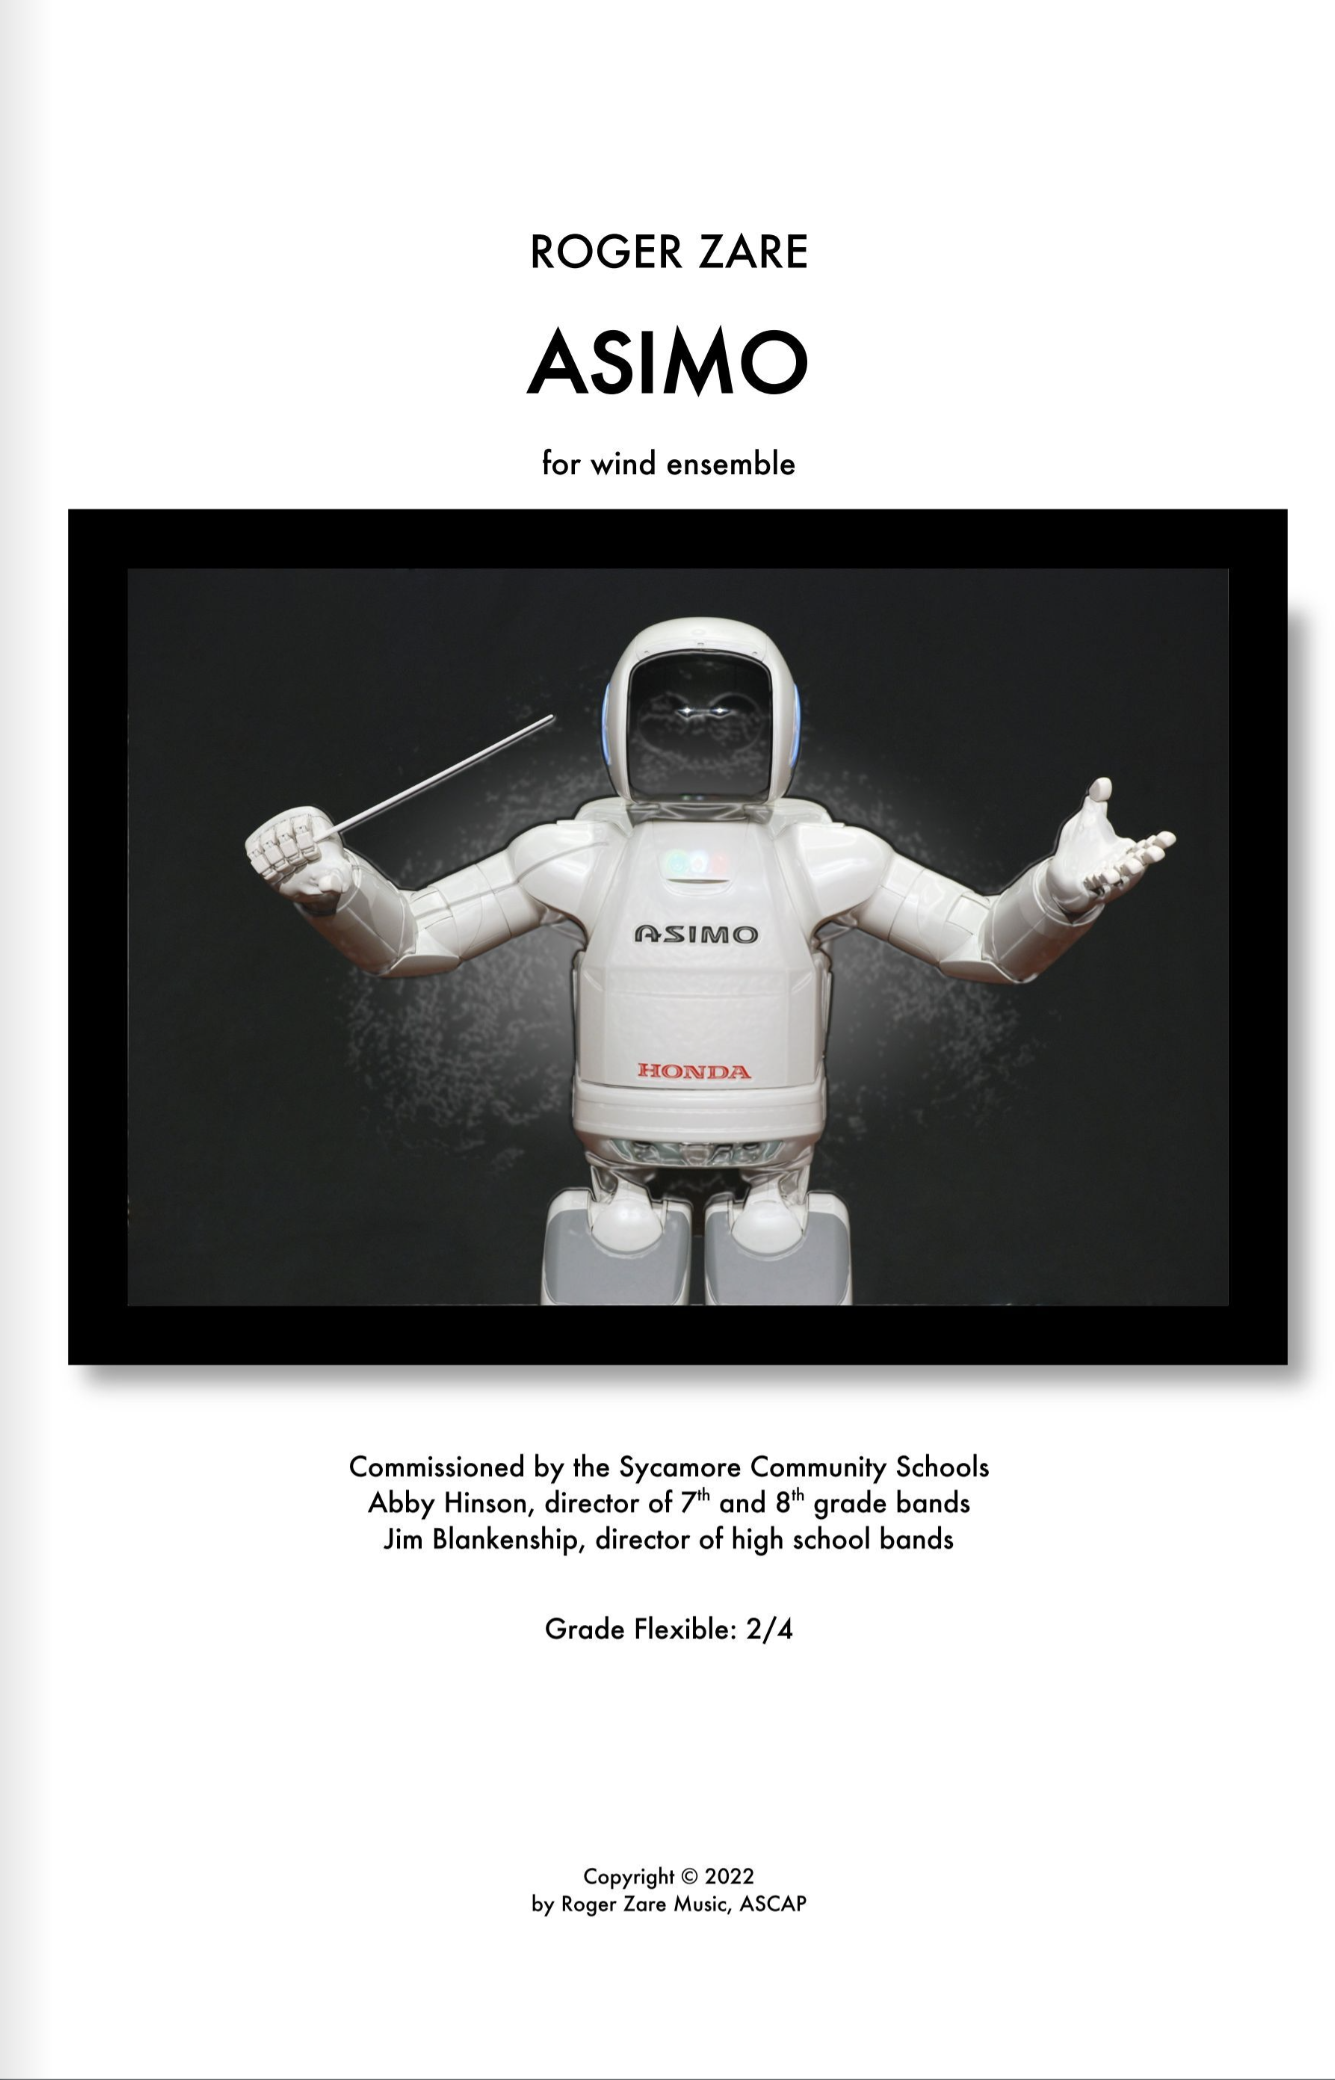 ASIMO by Roger Zare